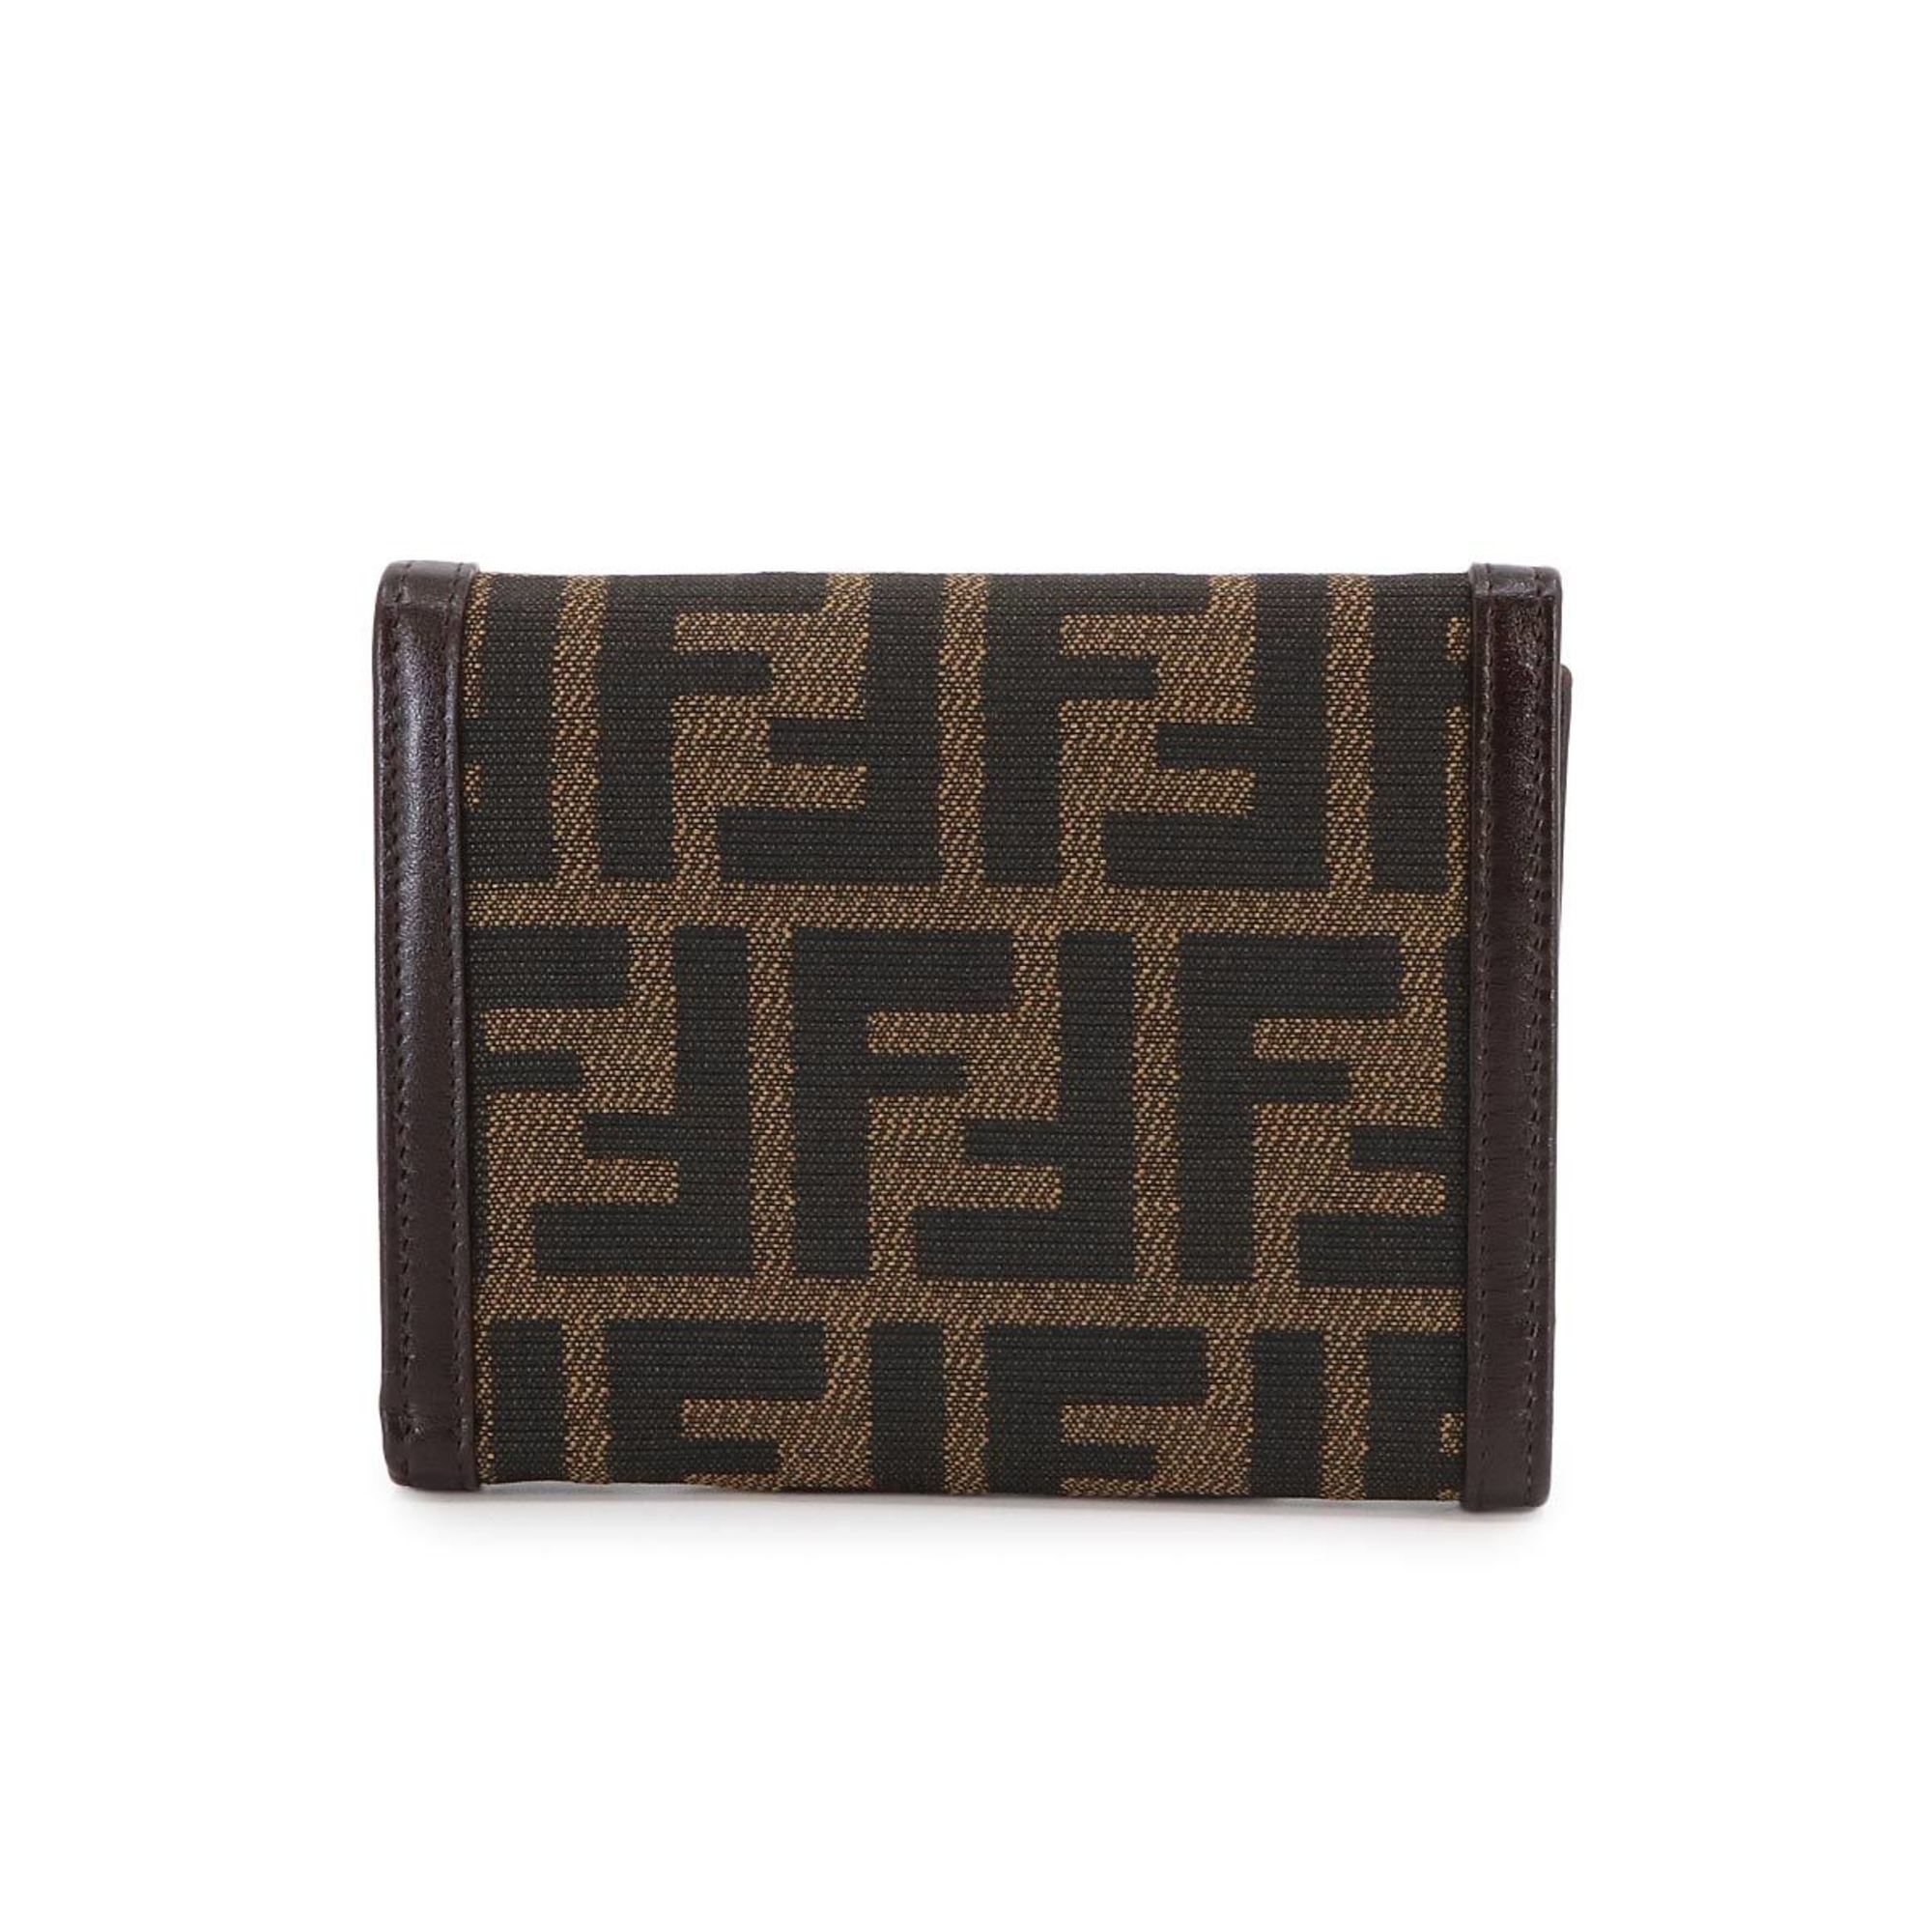 FENDI Zucca pattern bi-fold wallet canvas leather brown 31099 silver hardware Compact Wallet